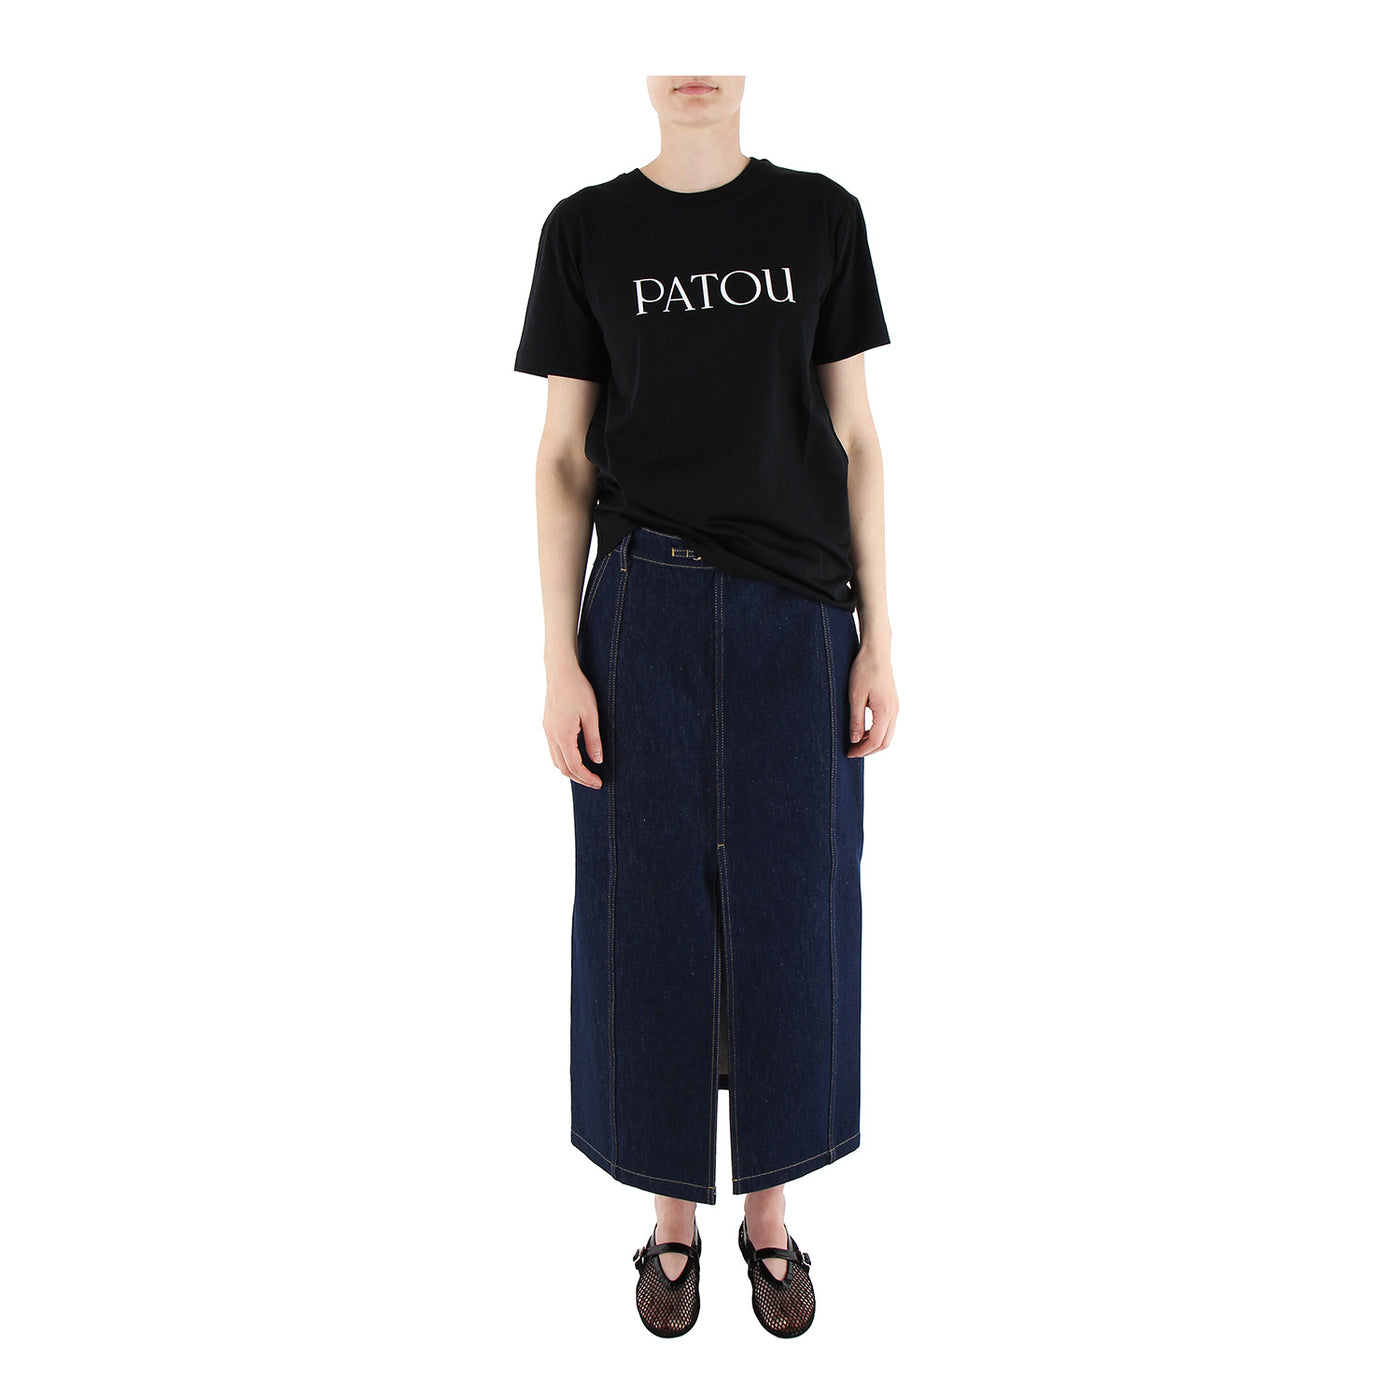 T-Shirt Patou Iconic aus Baumwolle